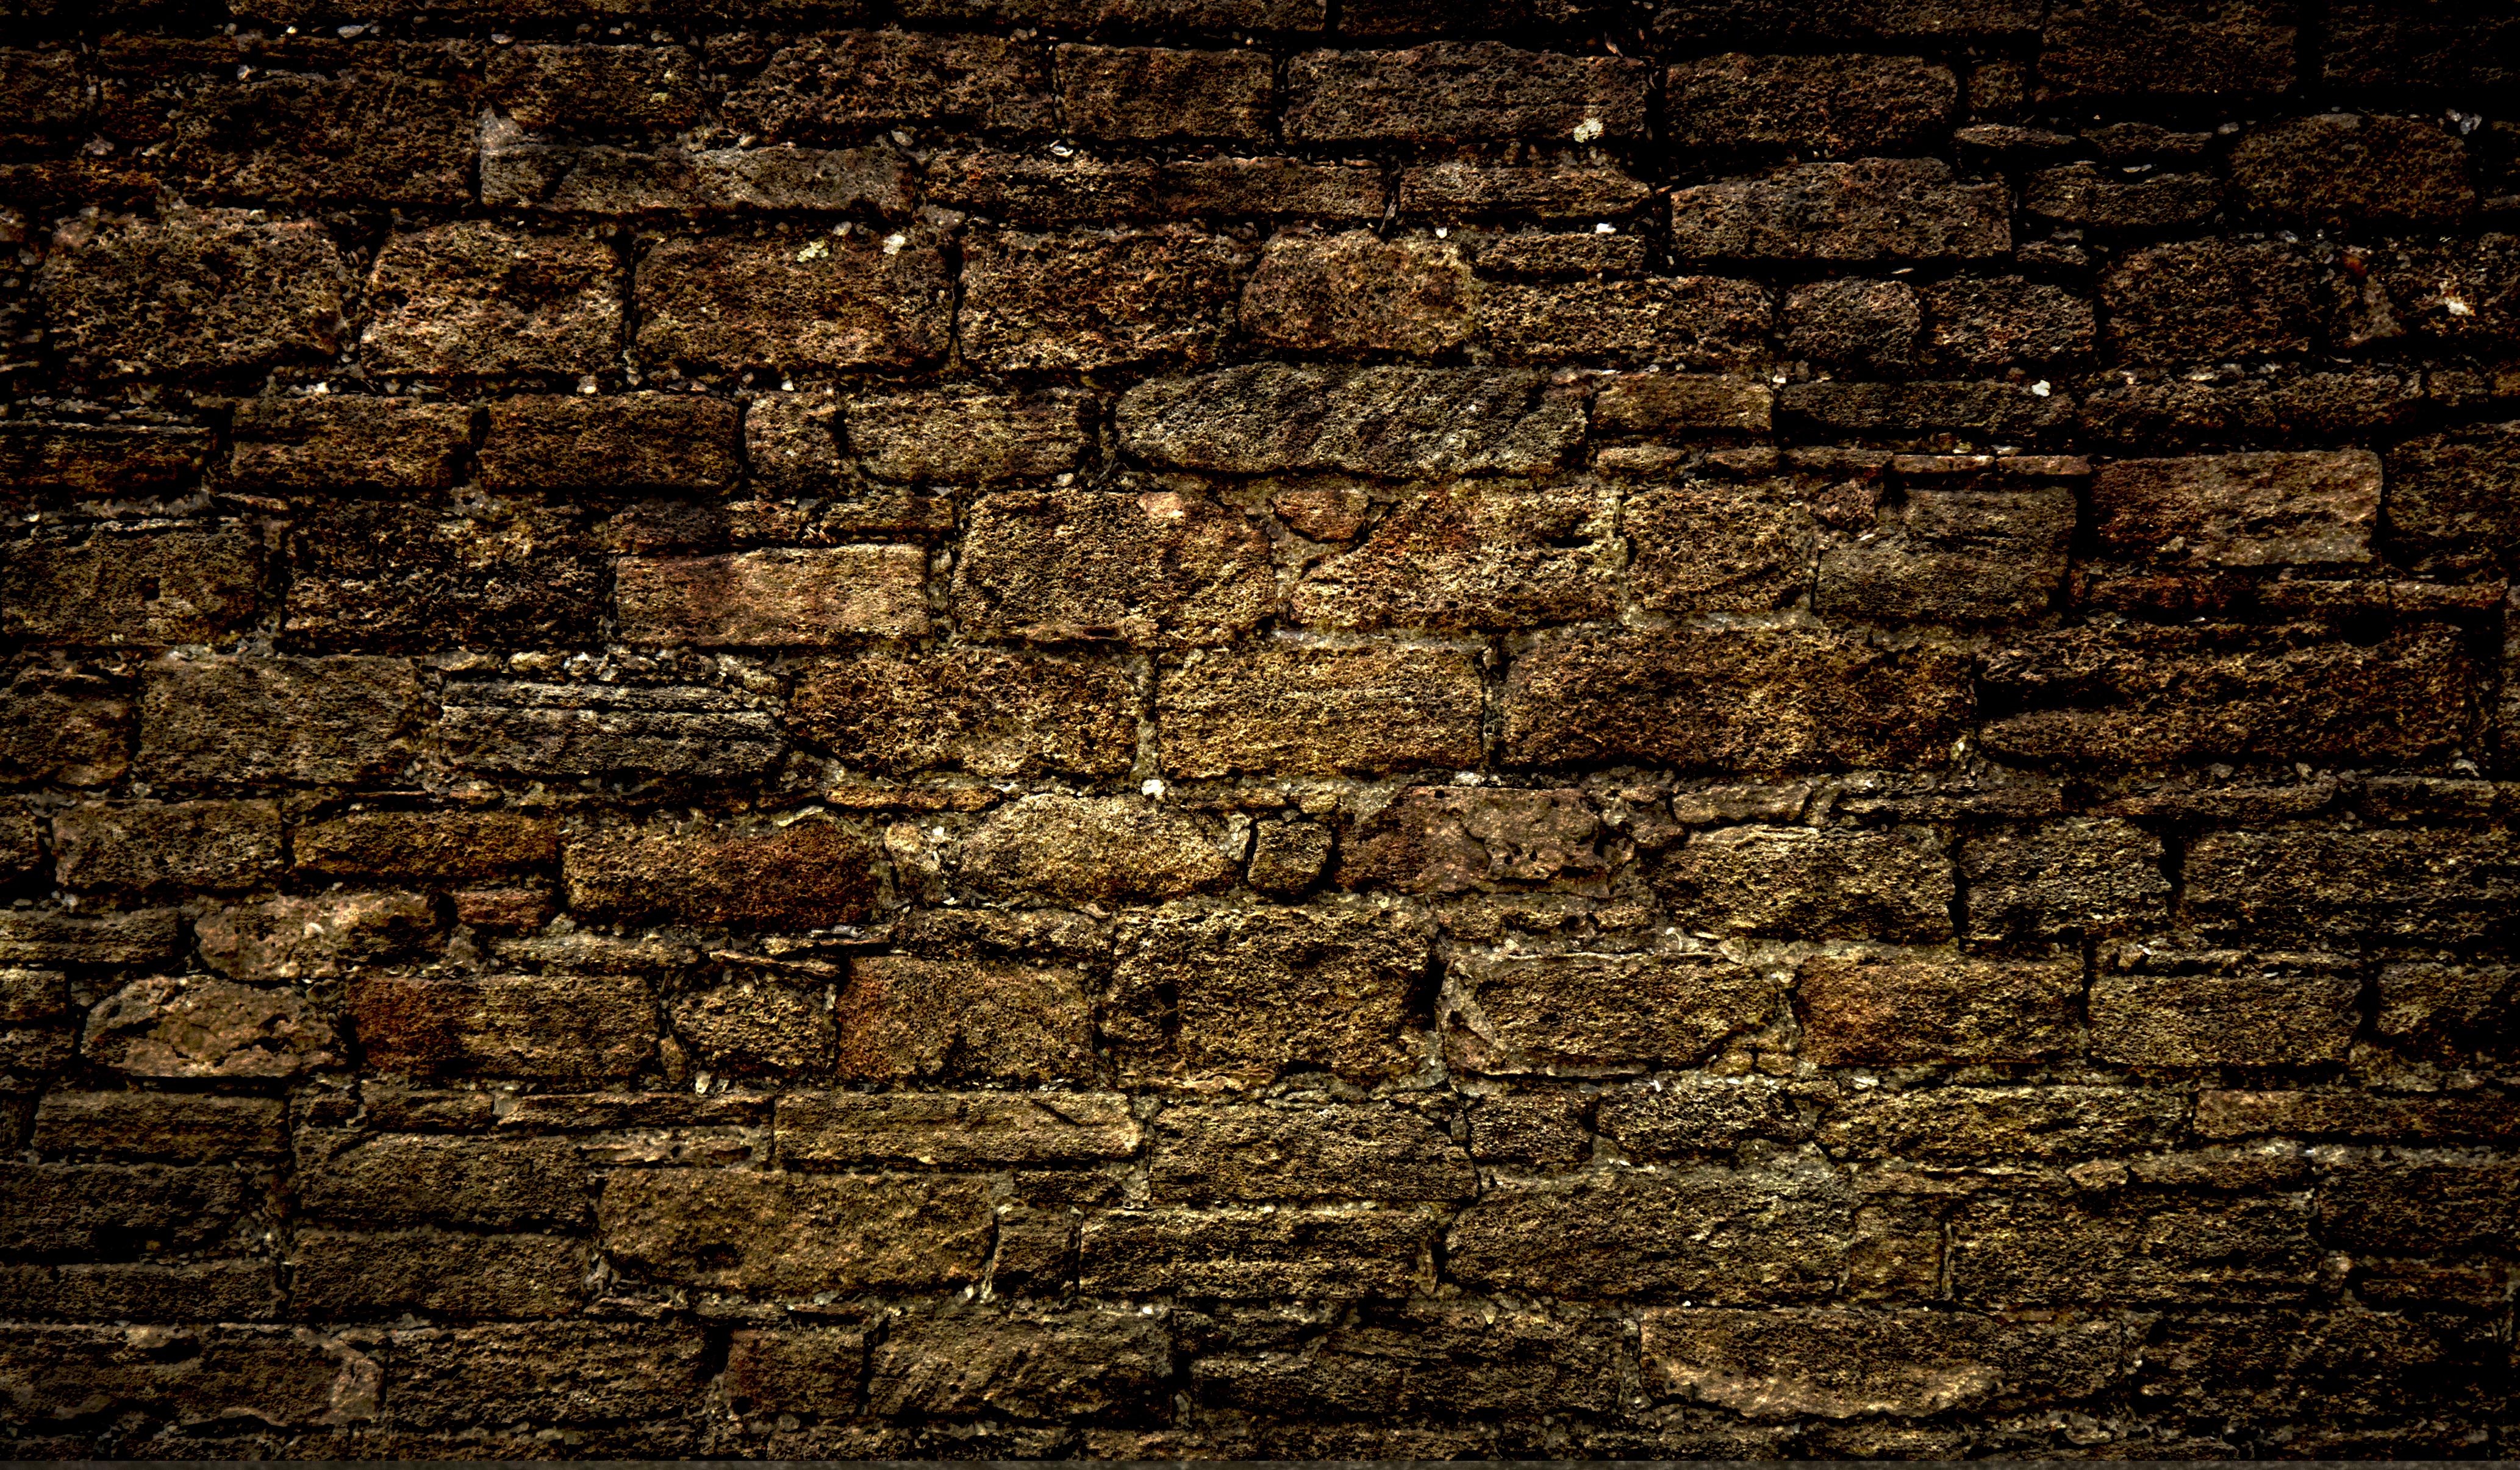 castle walls texture